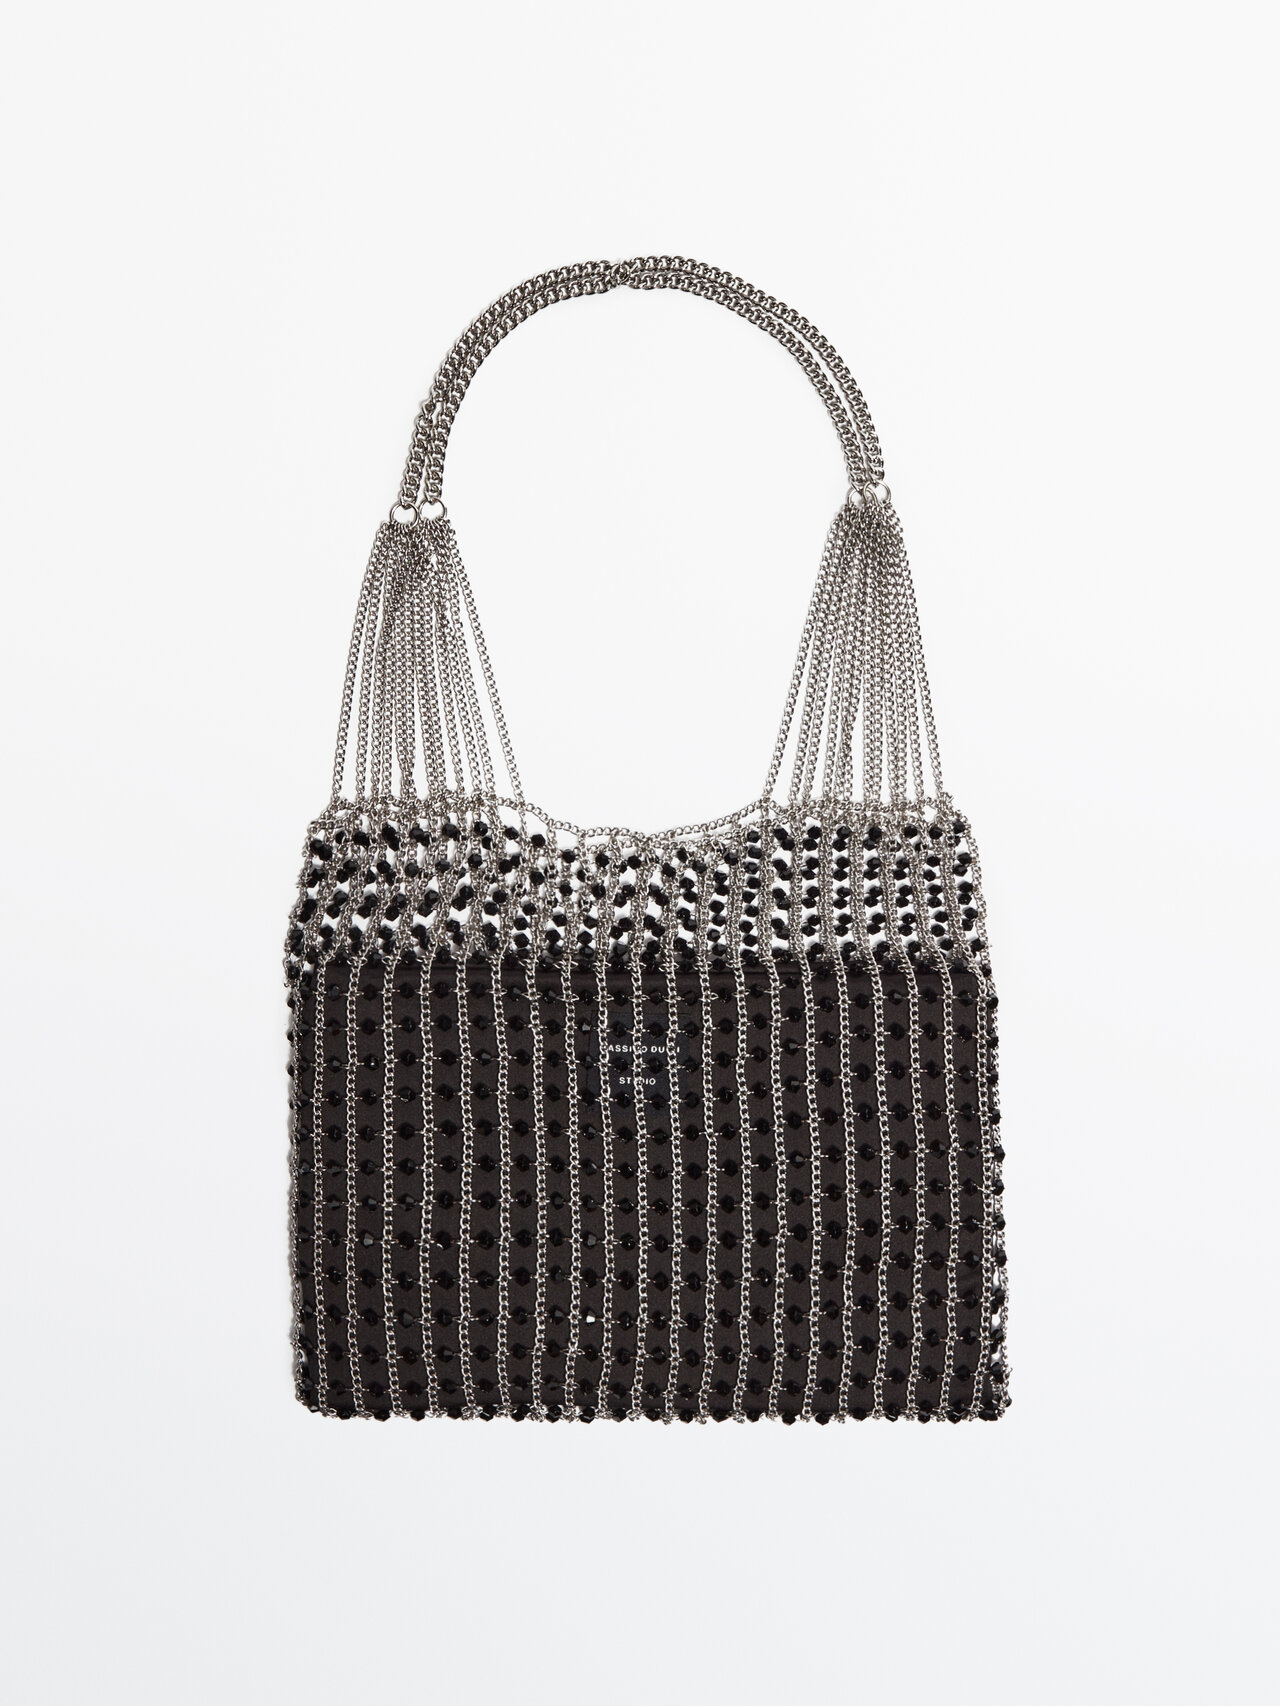 Massimo Dutti Beaded Bag With Chain Strap - Studio In Black